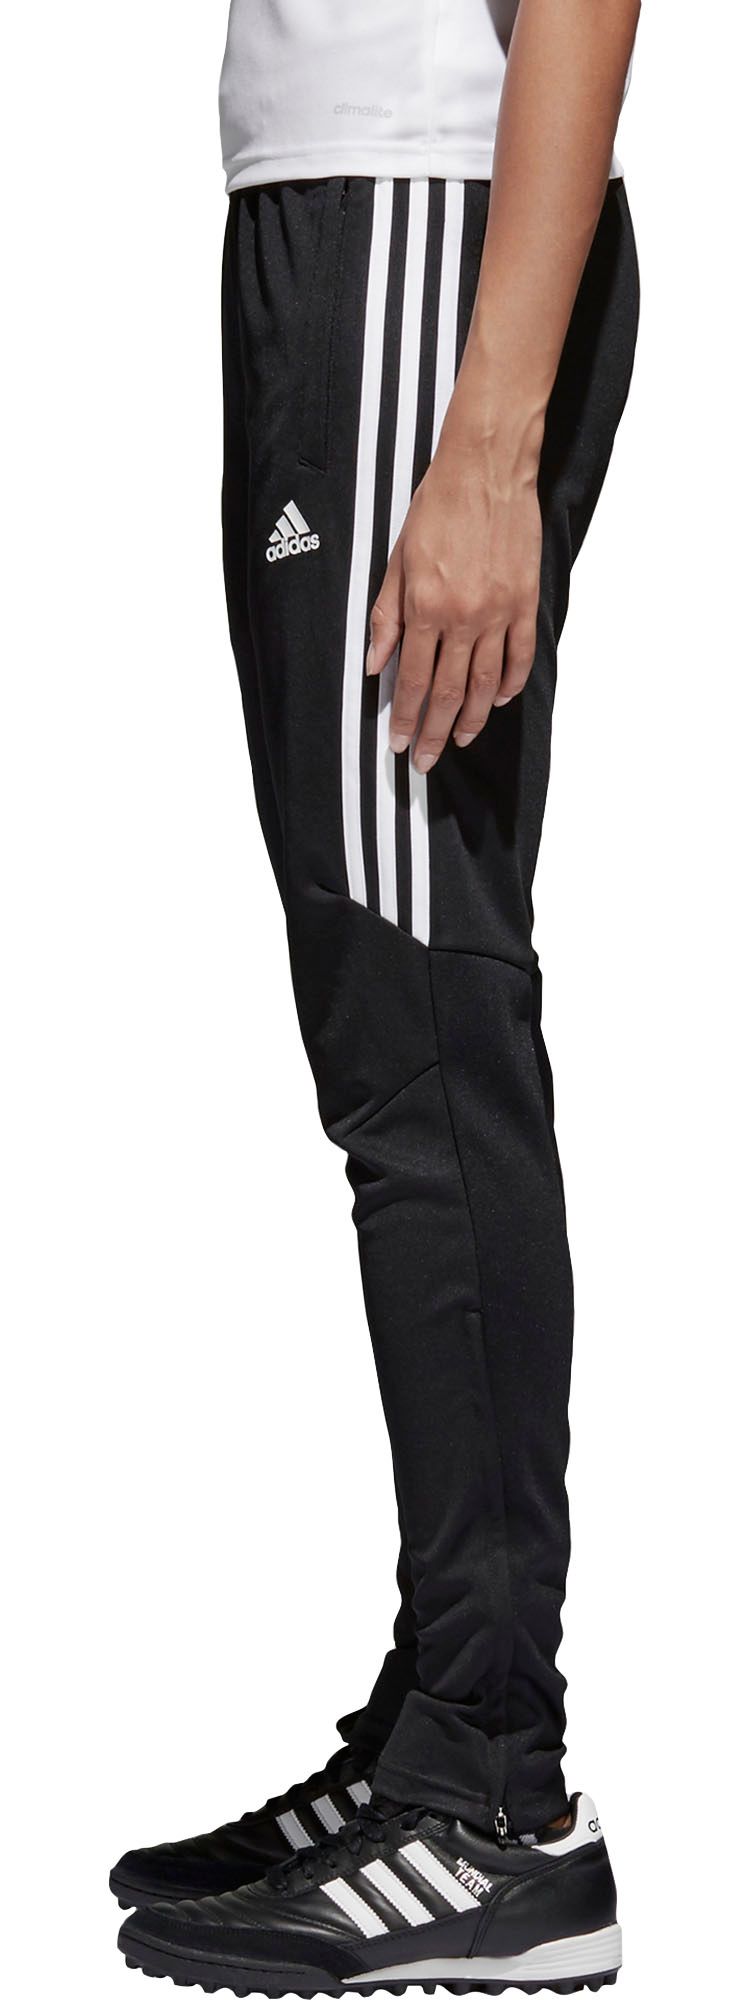 adidas women's tiro 17 soccer training pants